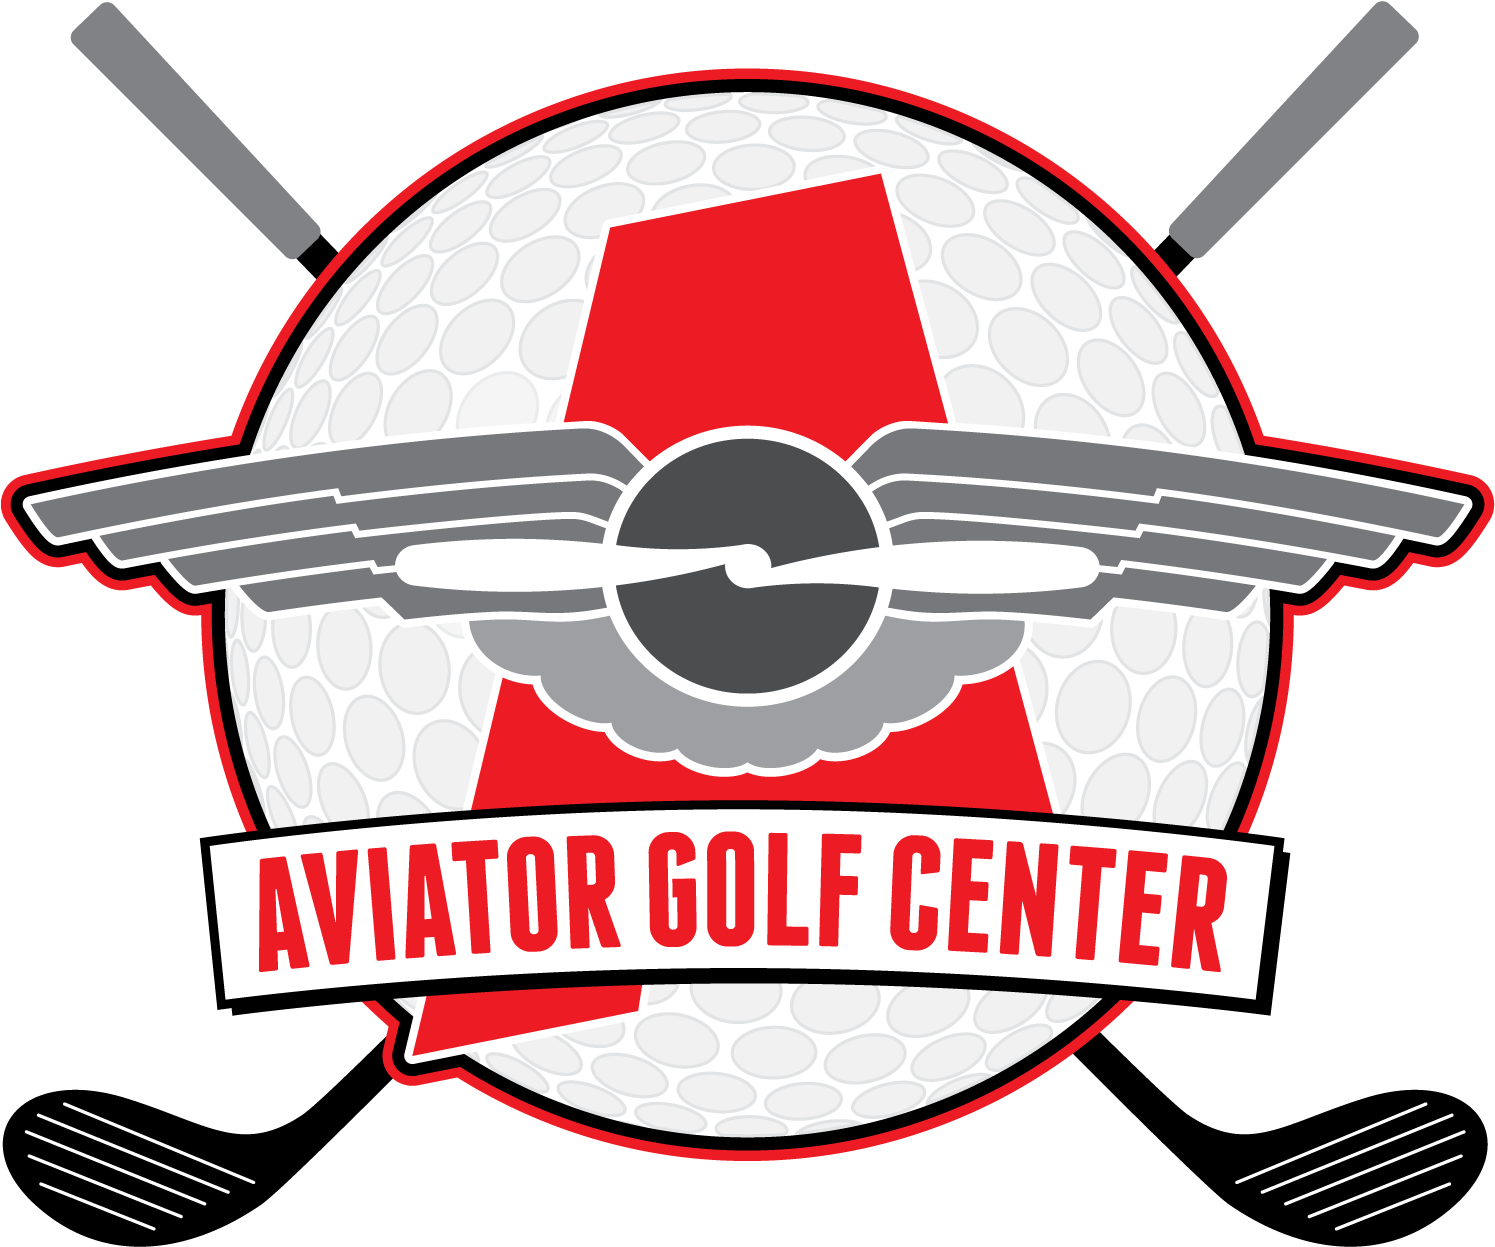 Golf Superintendent - Aviator Sports And Recreation (1500x1264)